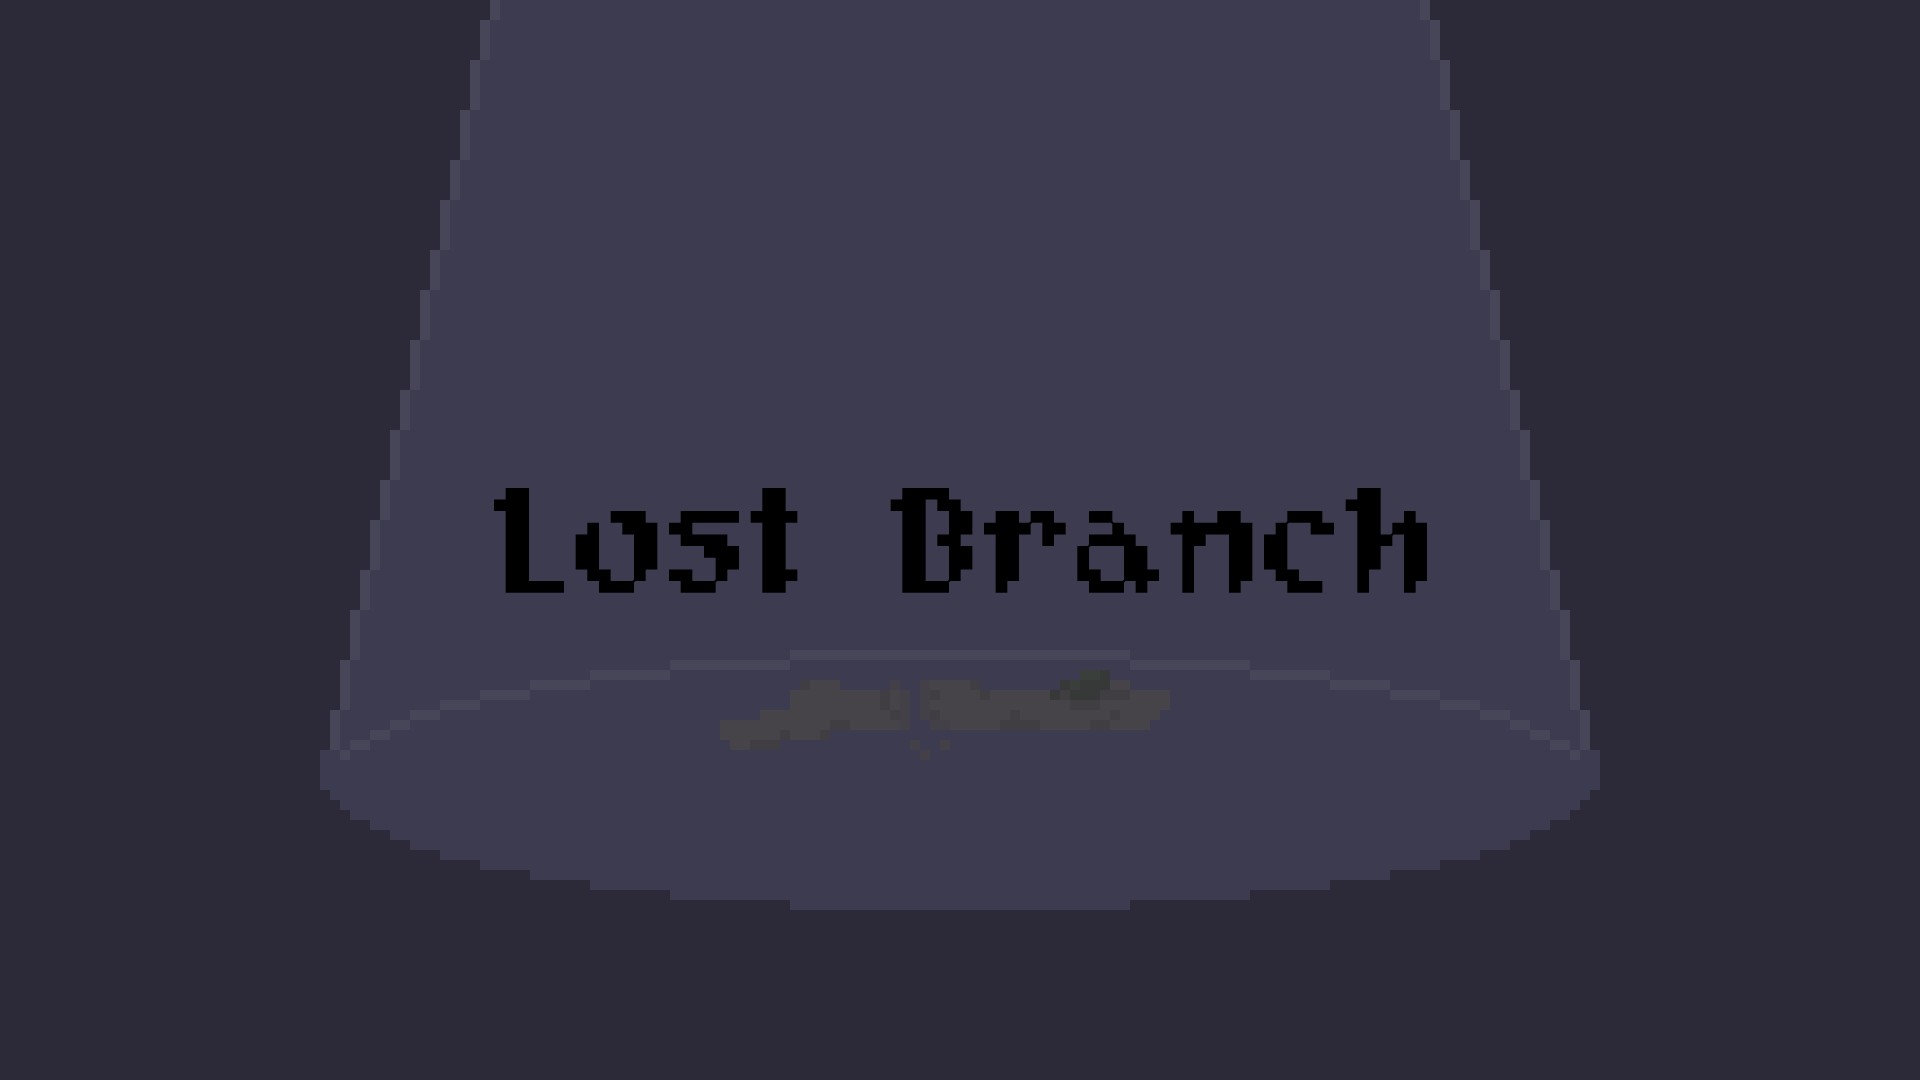 Lost Branch